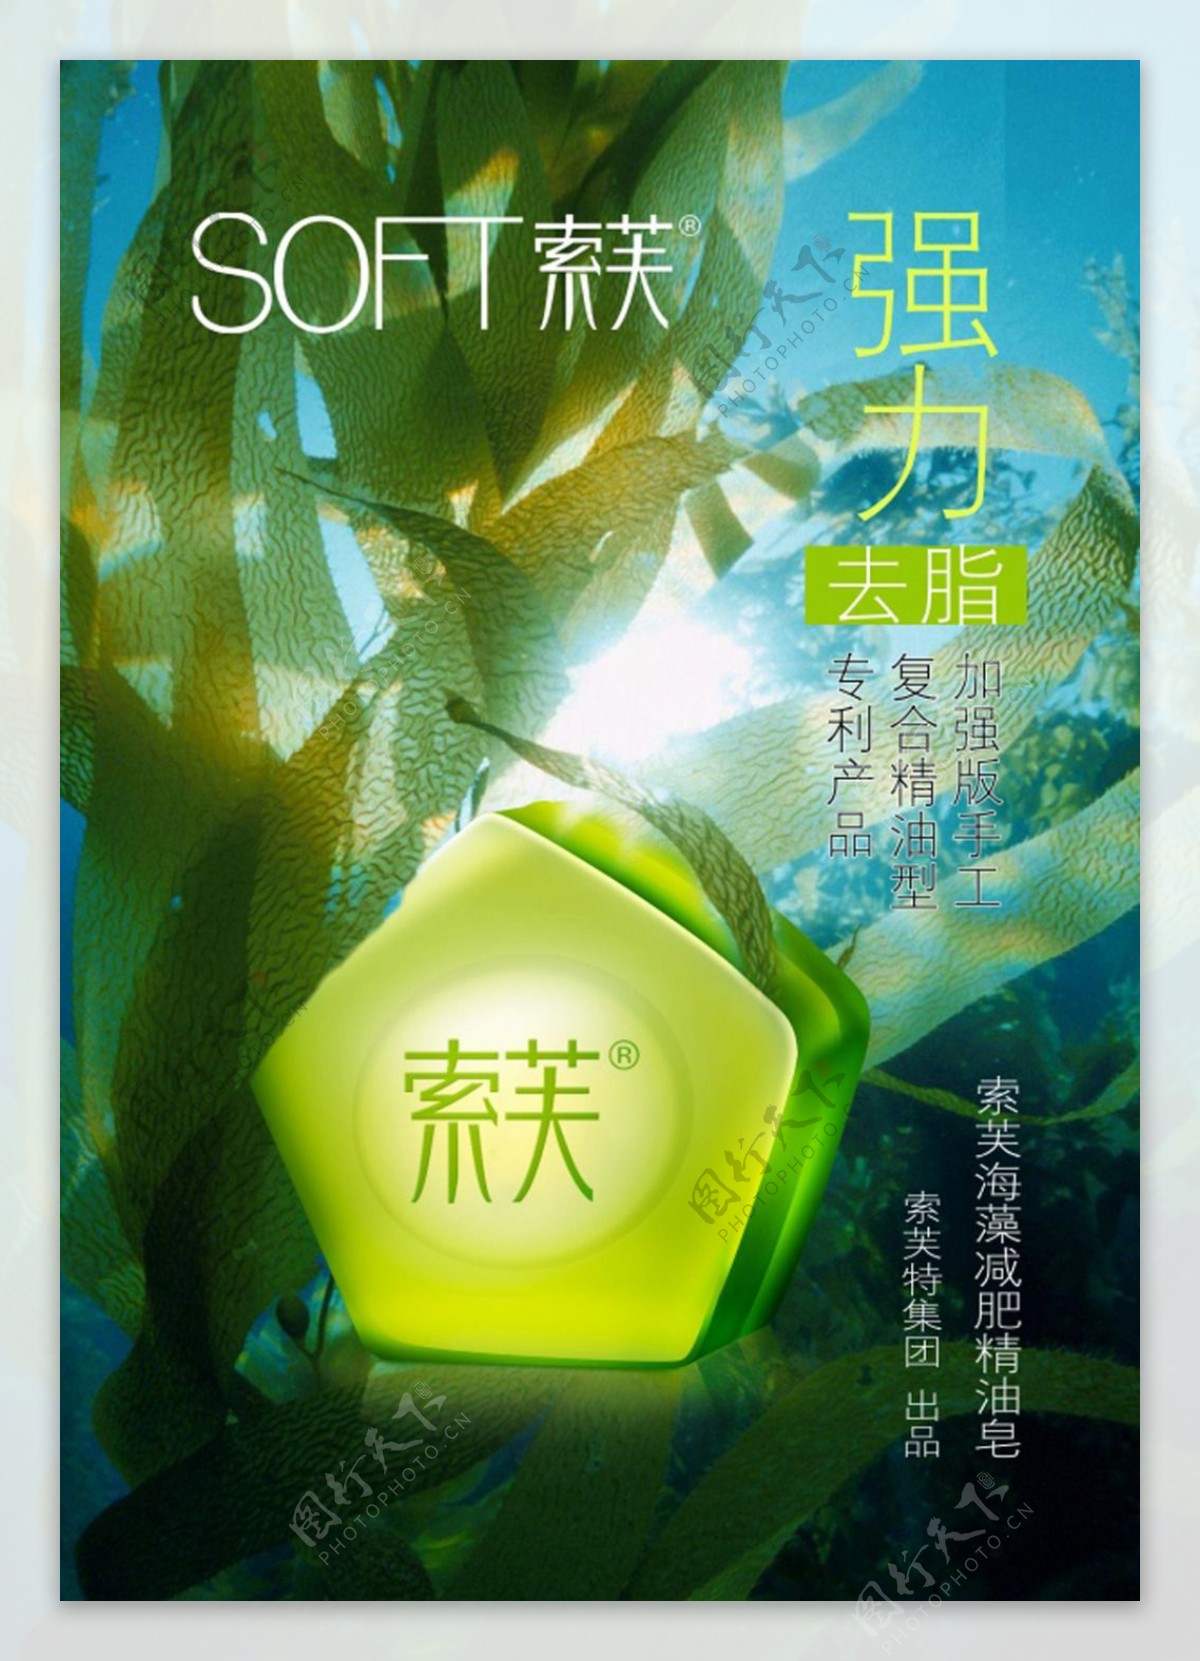 SPFT索芙强力精油皂宣传海报素材